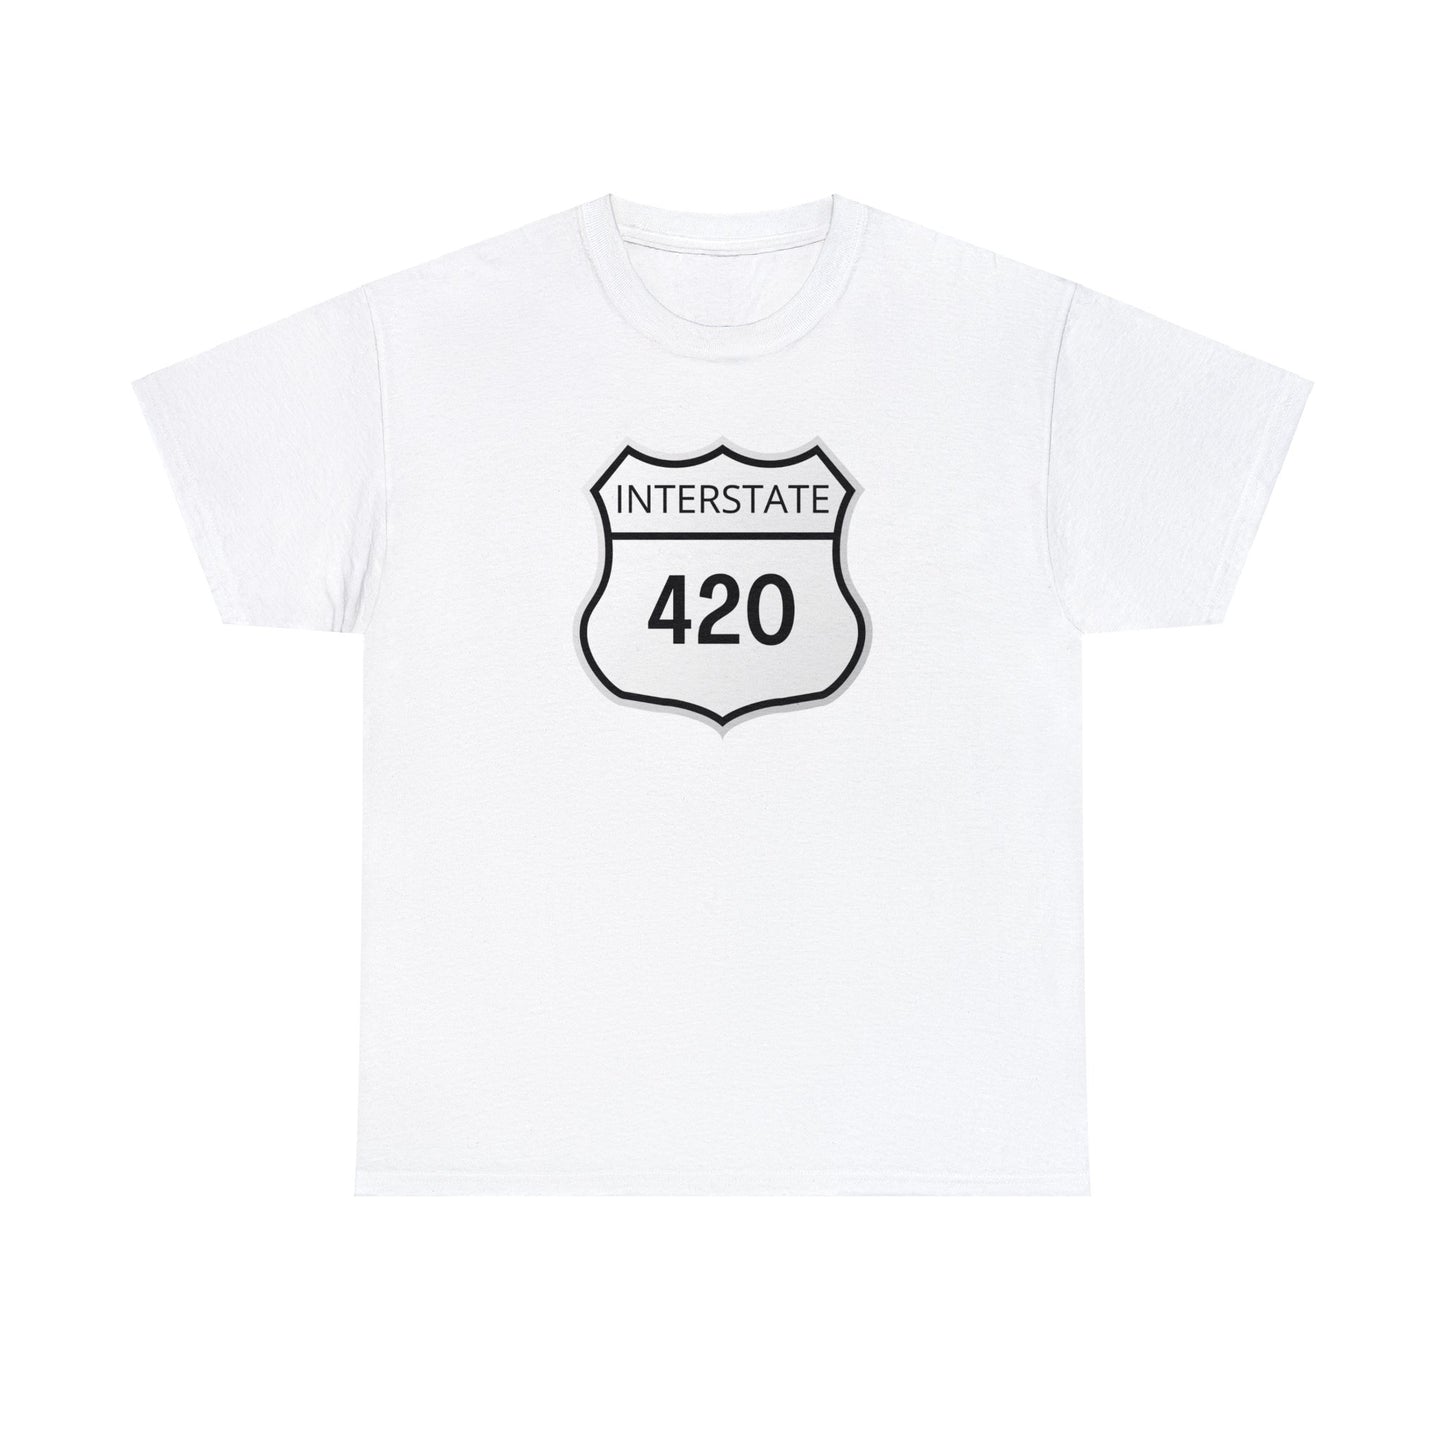 Interstate 420 Shirt Tee